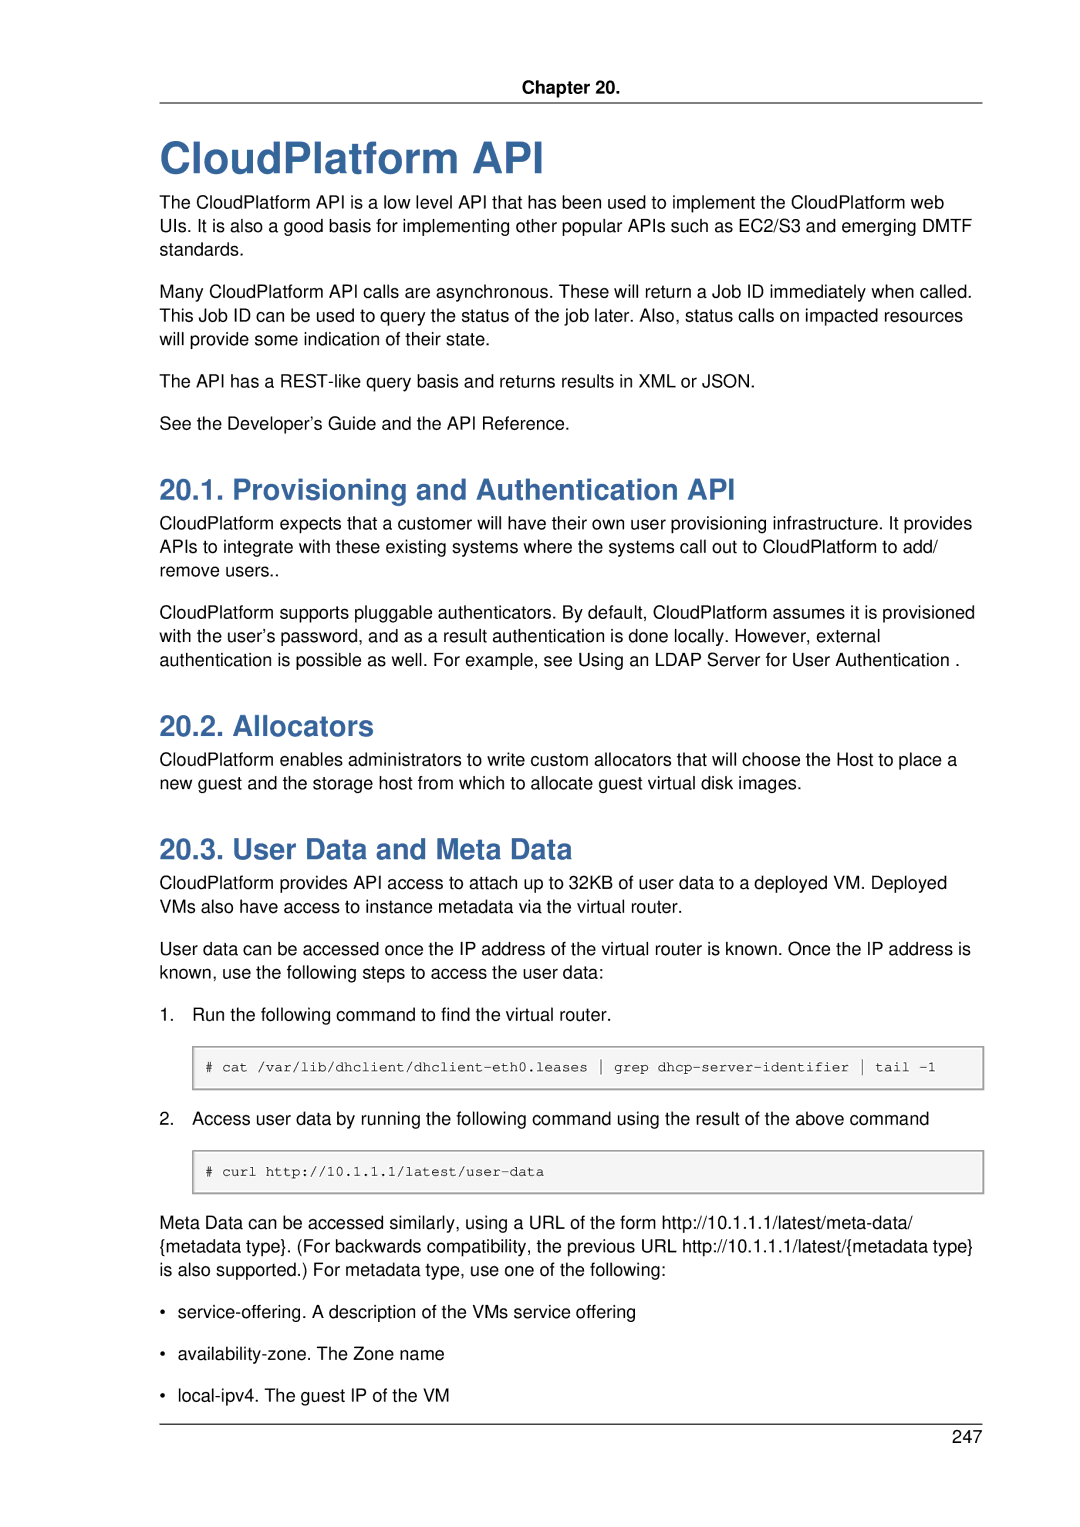 Citrix Systems 4.2 manual CloudPlatform API, Provisioning and Authentication API, Allocators, User Data and Meta Data 